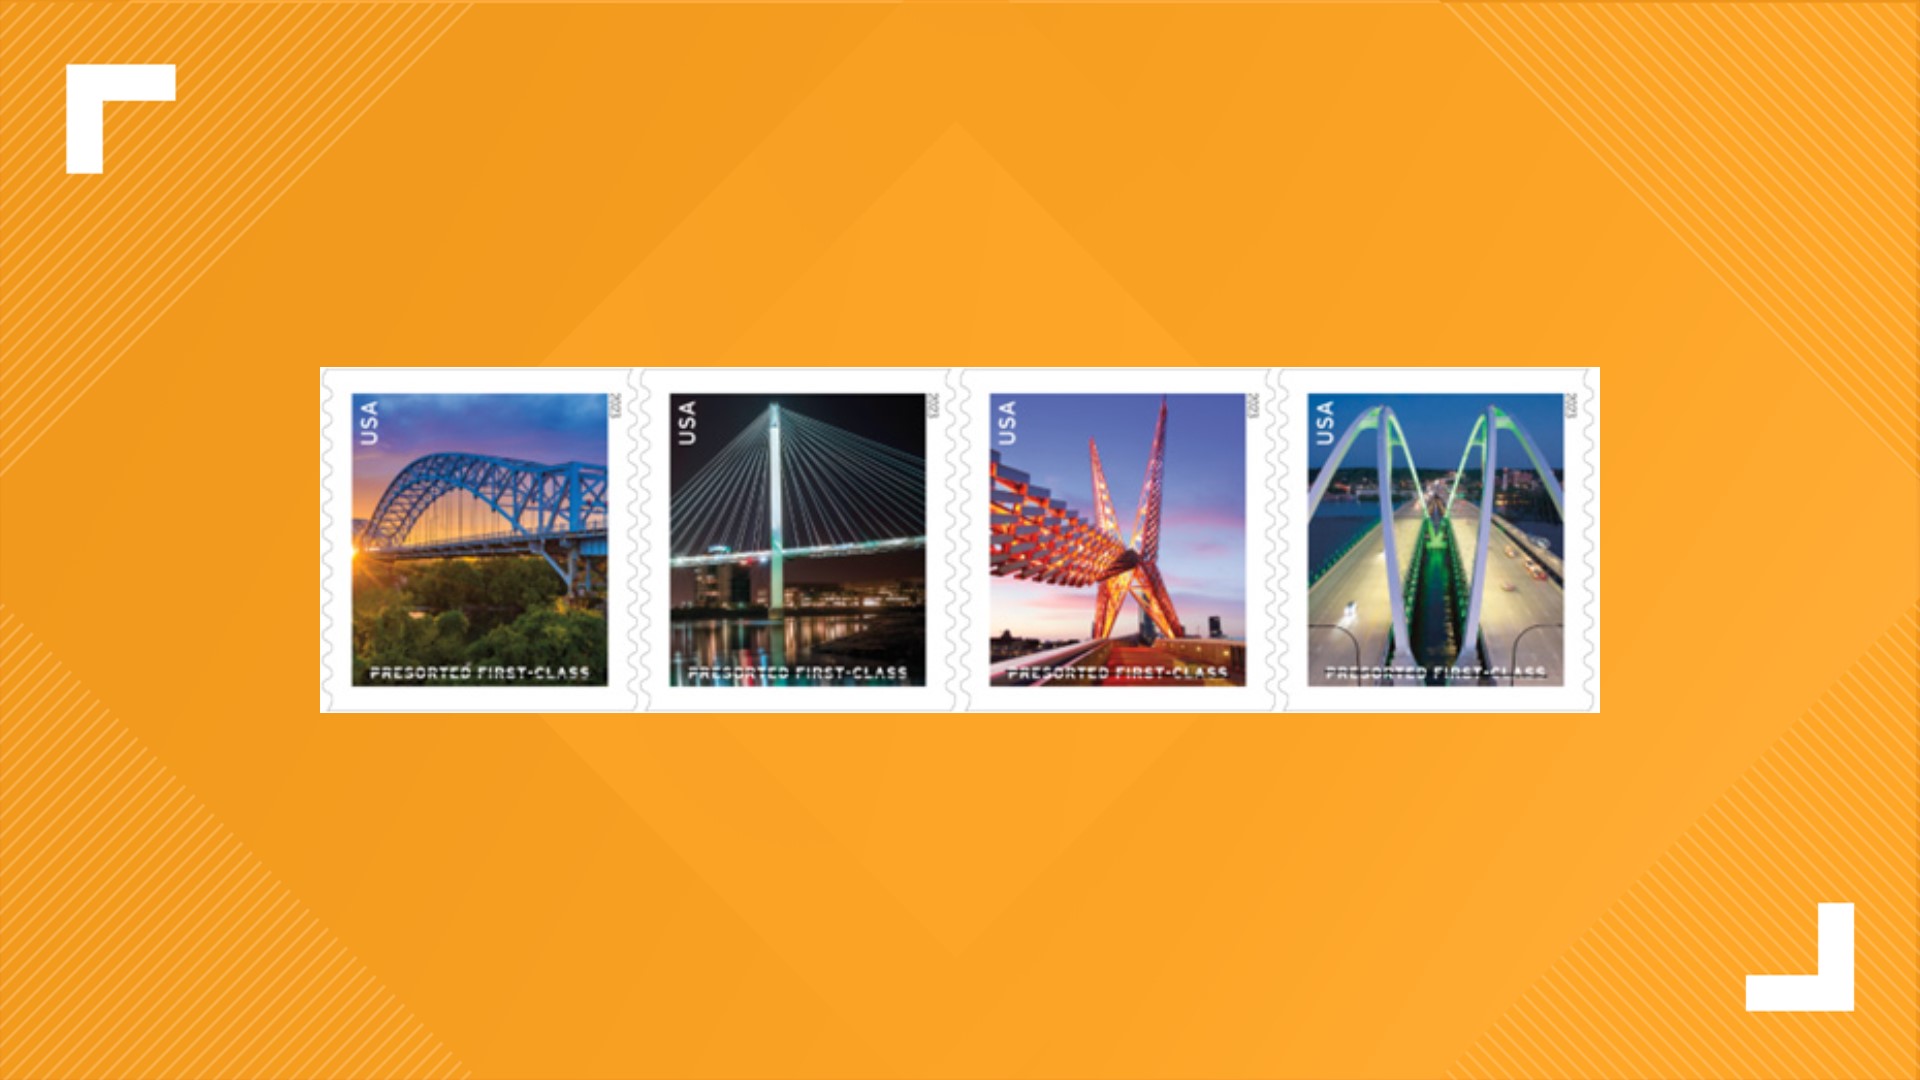 I74 Bridge featured on 2023 USPS stamp